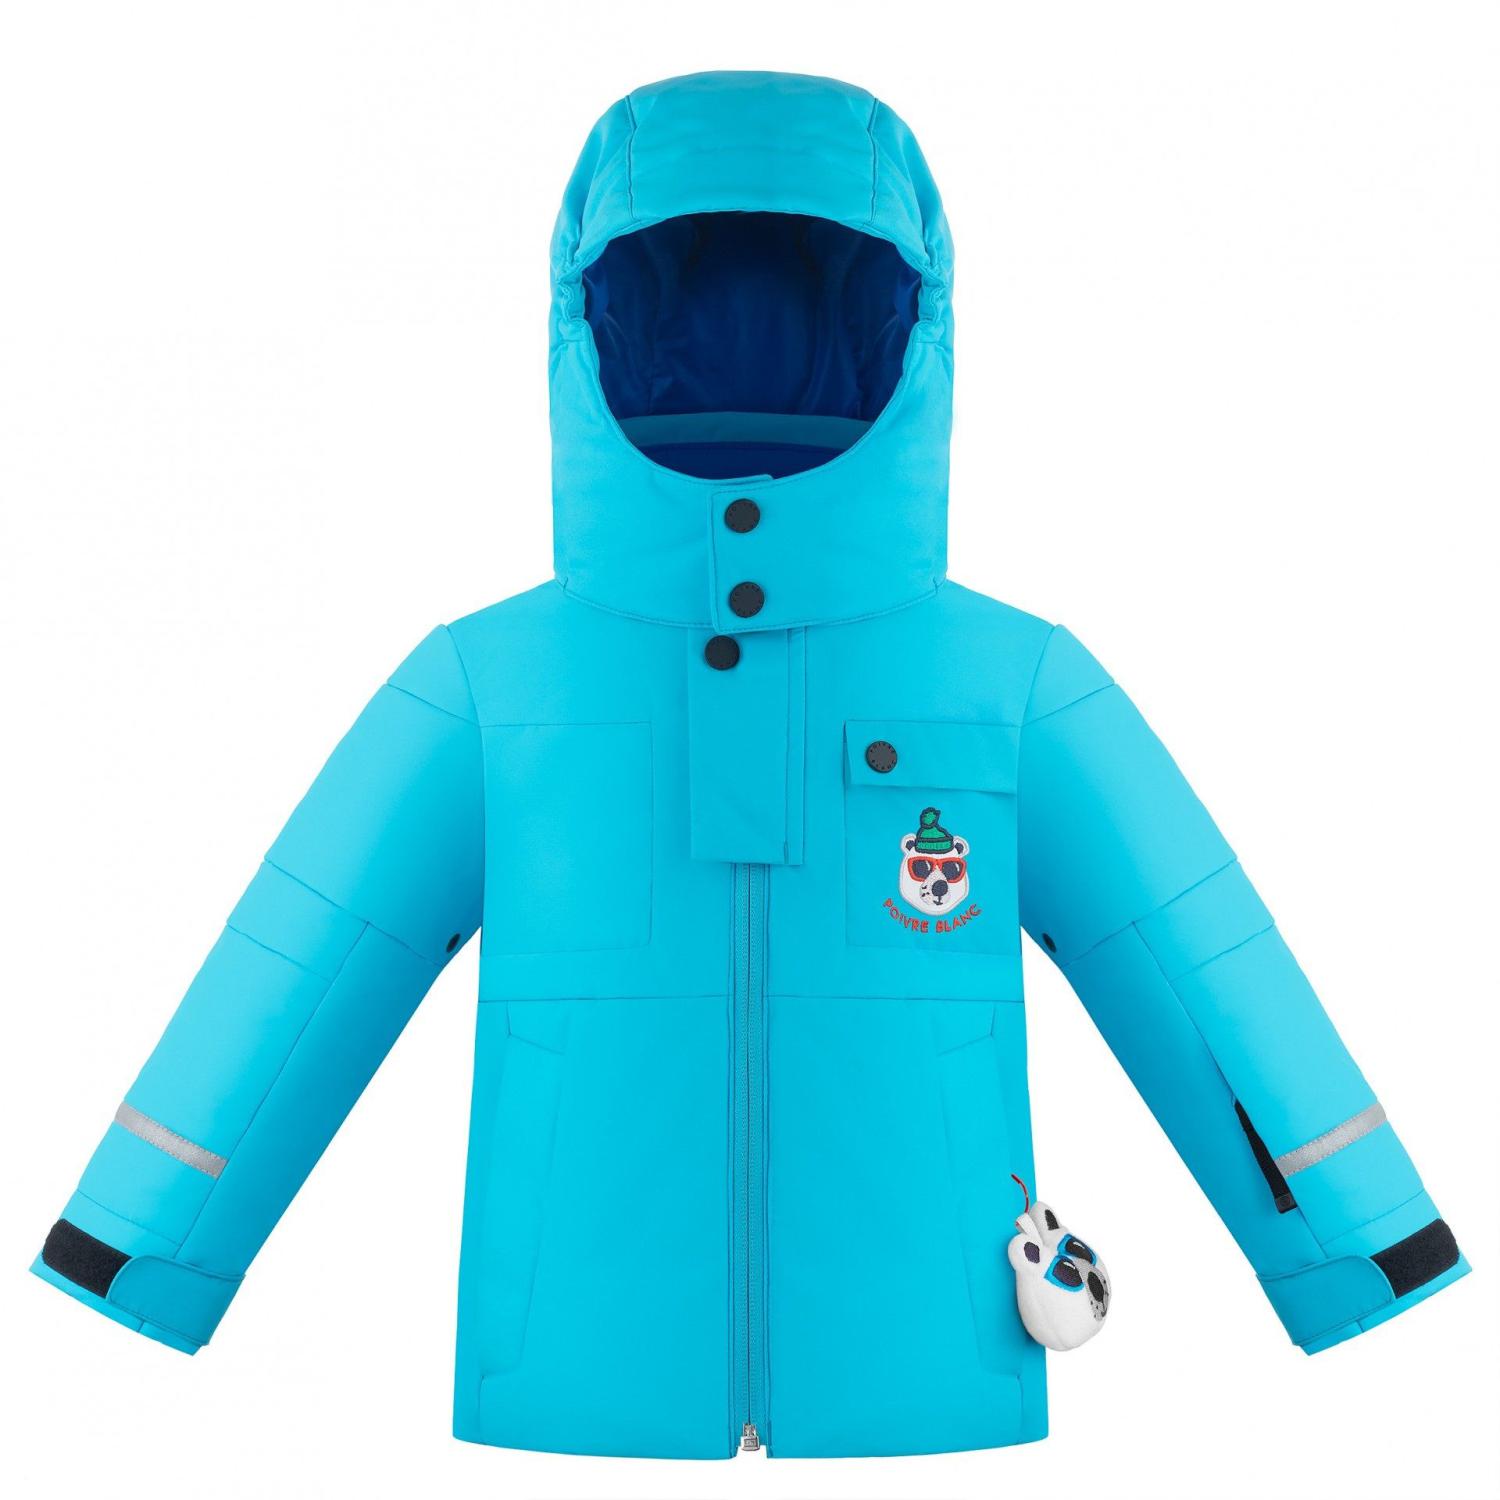 Куртка горнолыжная Poivre Blanc 19-20 Ski Jacket Aqua Blue куртка горнолыжная poivre blanc 19 20 ski jacket aqua blue